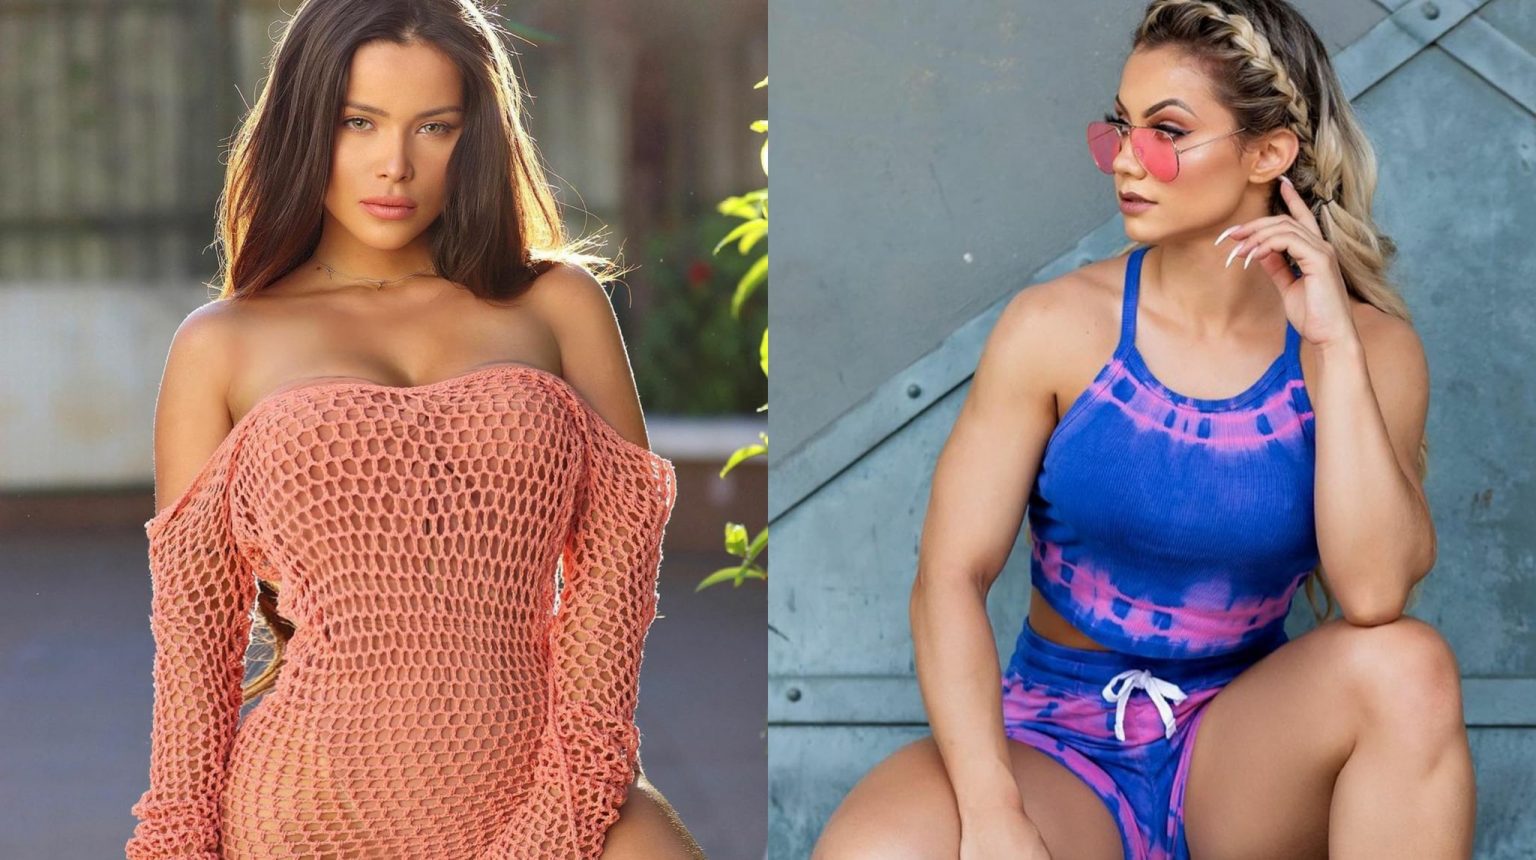 Top 10 hottest Brazilian female fitness models of 2021